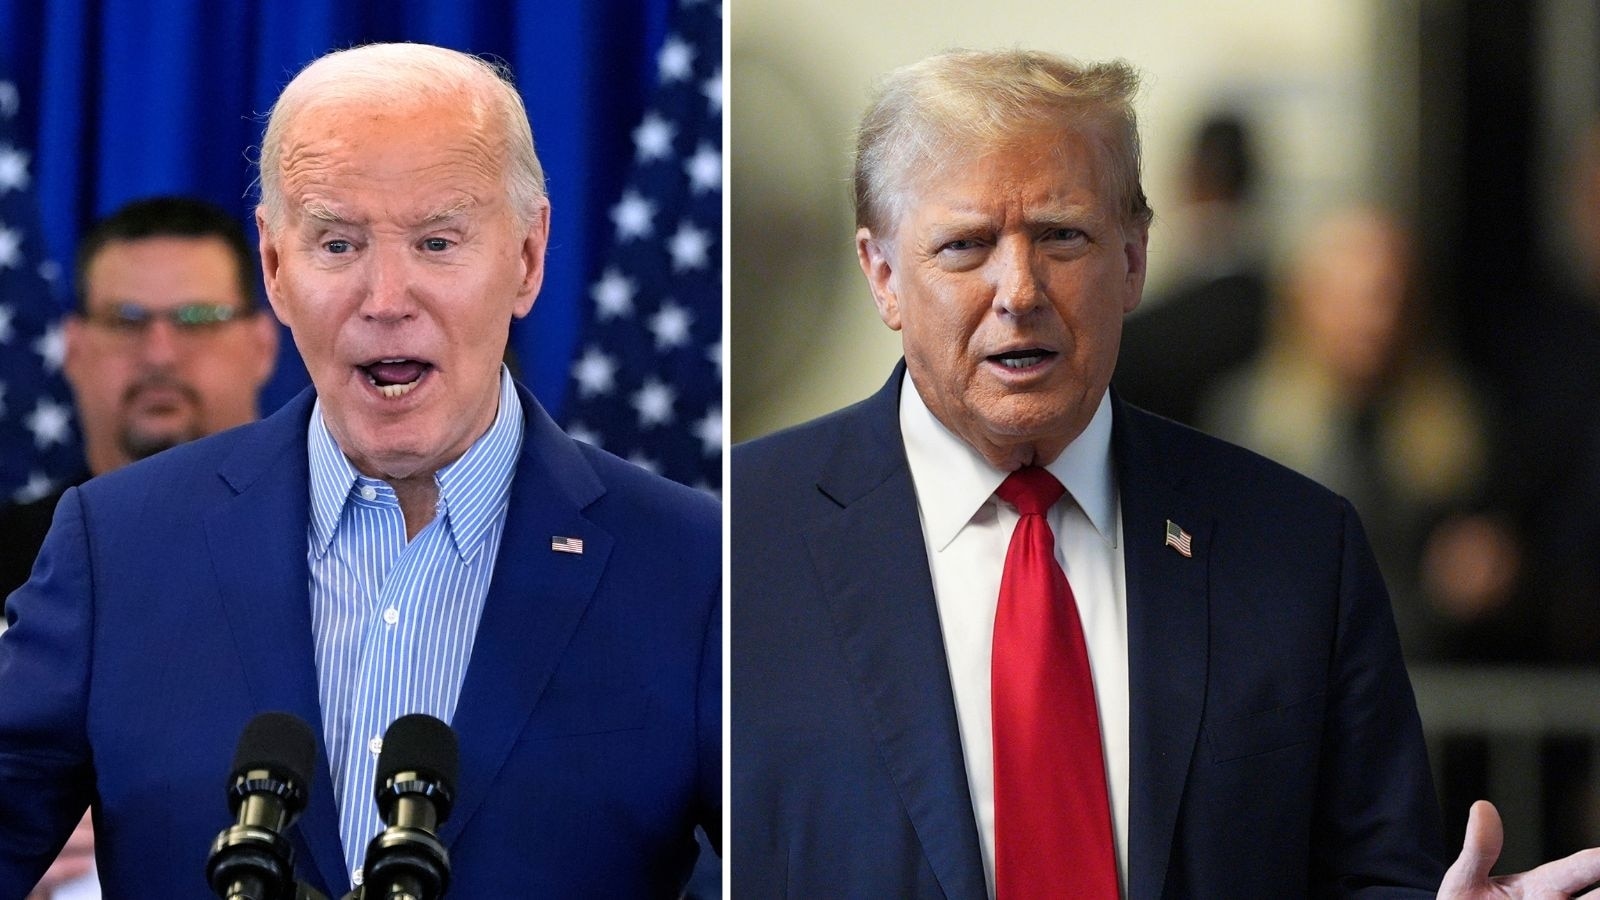 Joe Biden challenges Trump to two presidential debates in fiery video: ‘I hear you're free on Wednesdays’